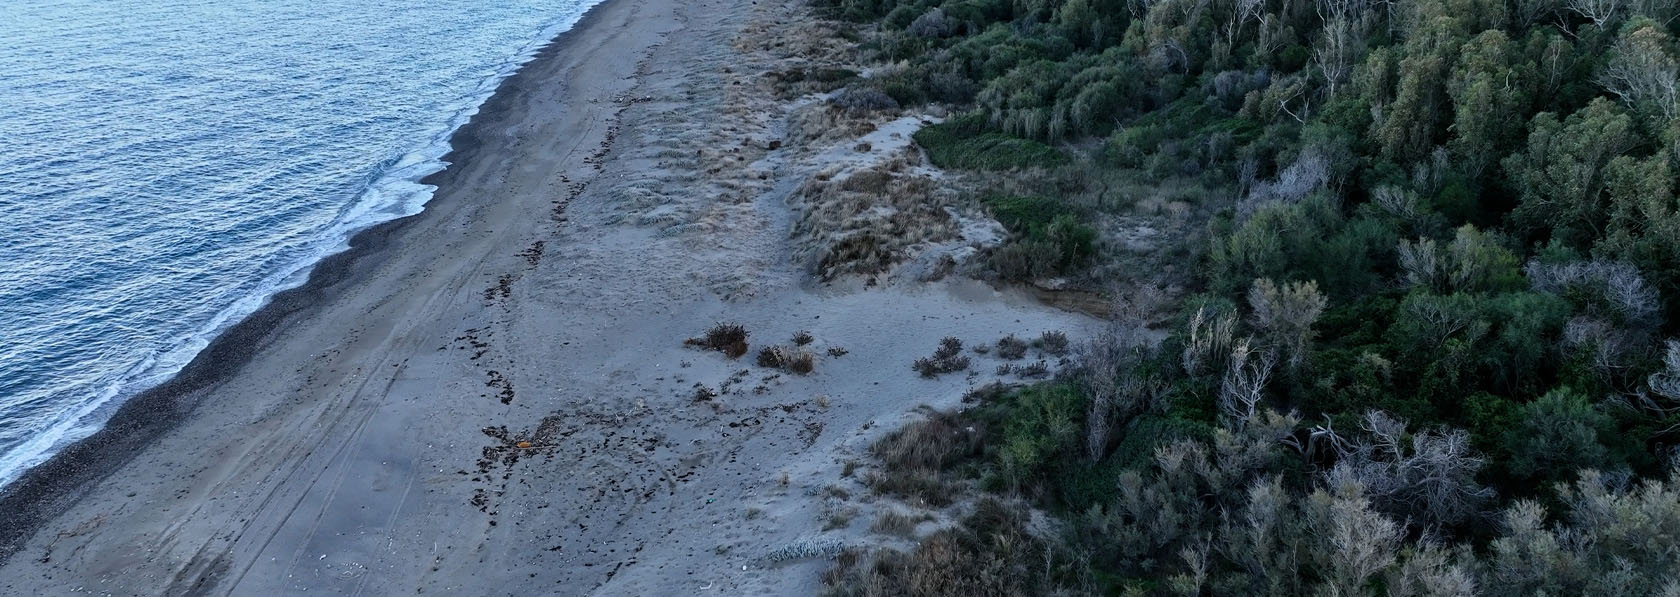 dune di marinella home